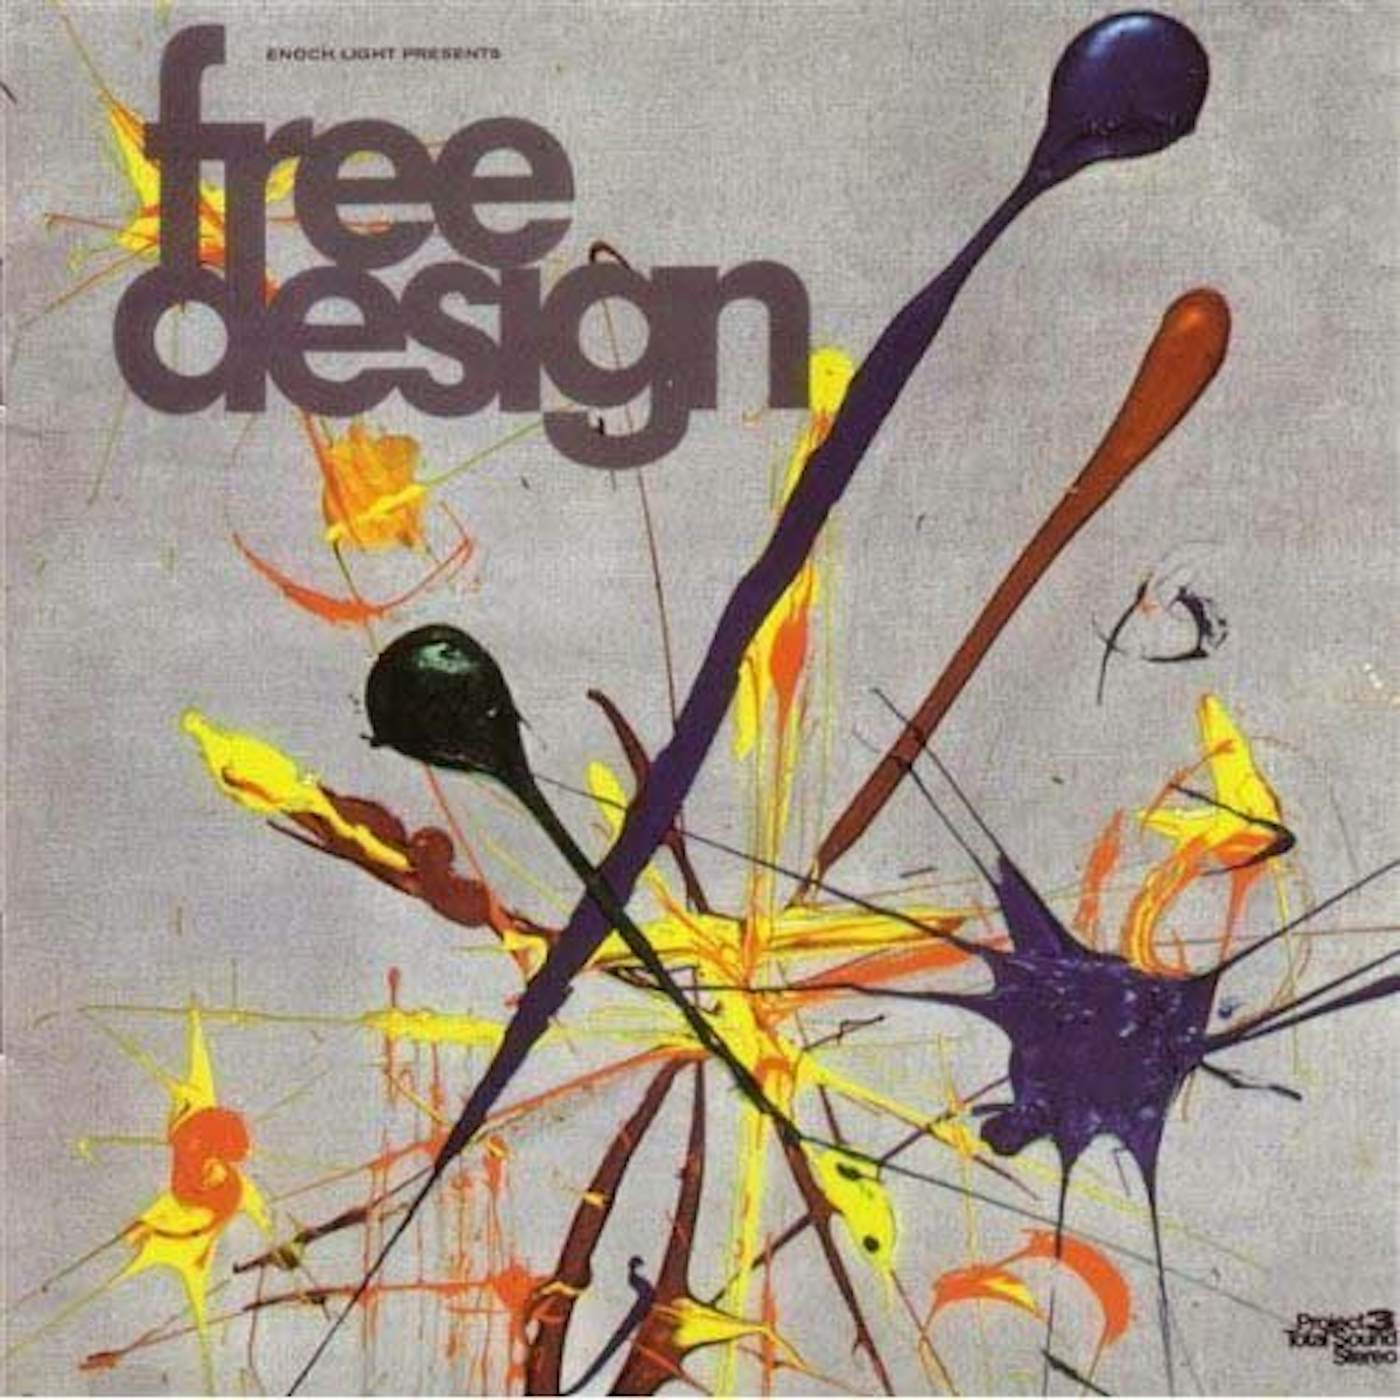 The Free Design STARS/TIME/BUBBLES/LOVE+1 CD